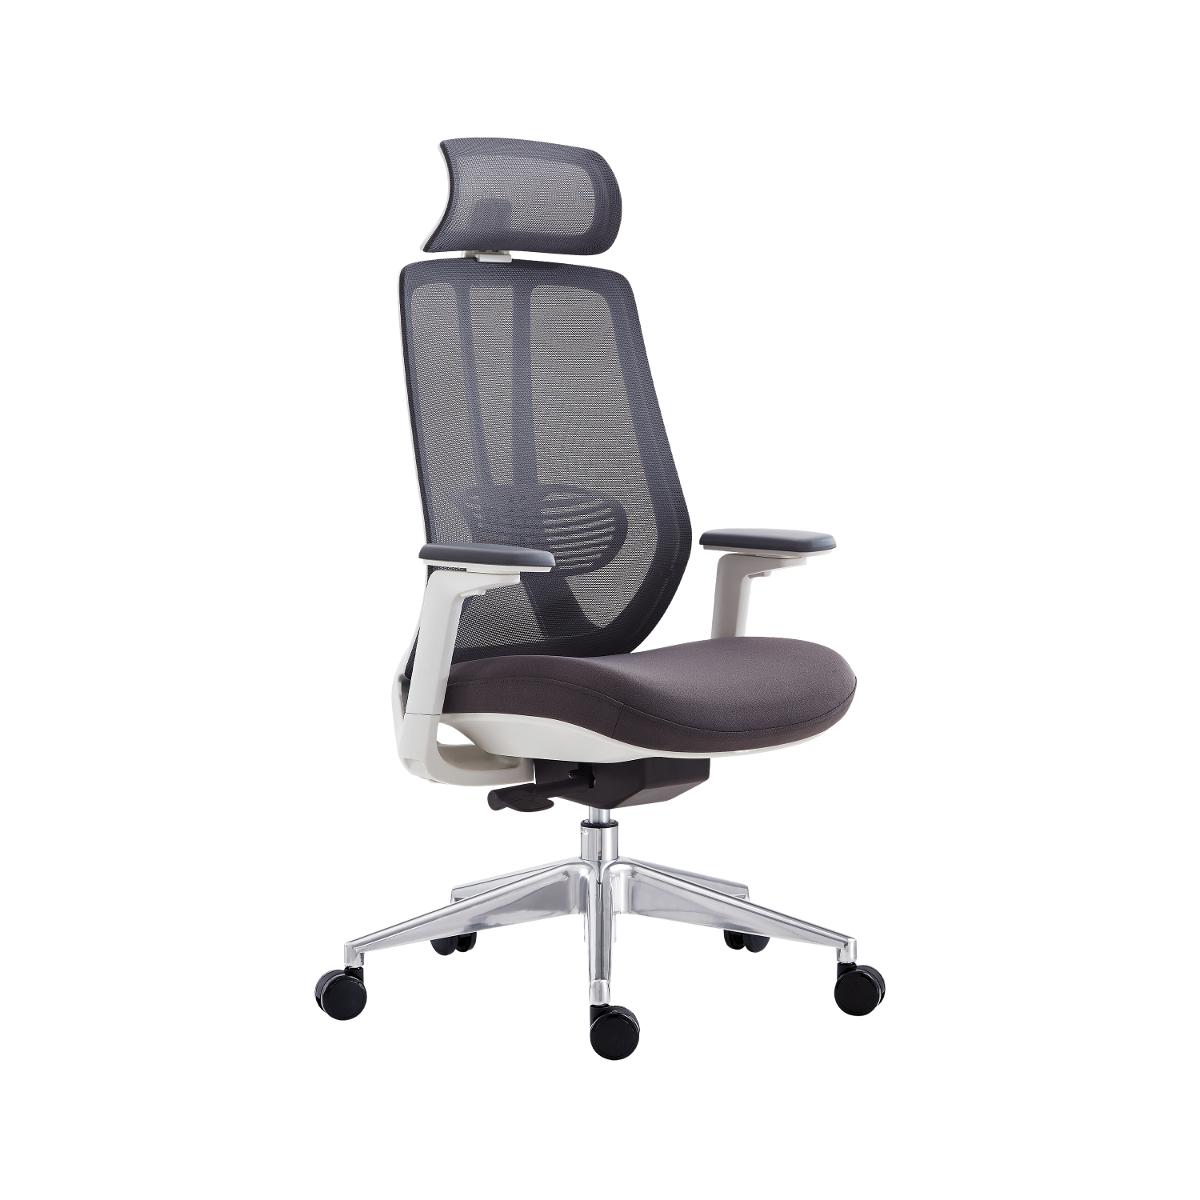 Super Chair เก้าอี้ผู้บริหาร รุ่น 7102-2 H White